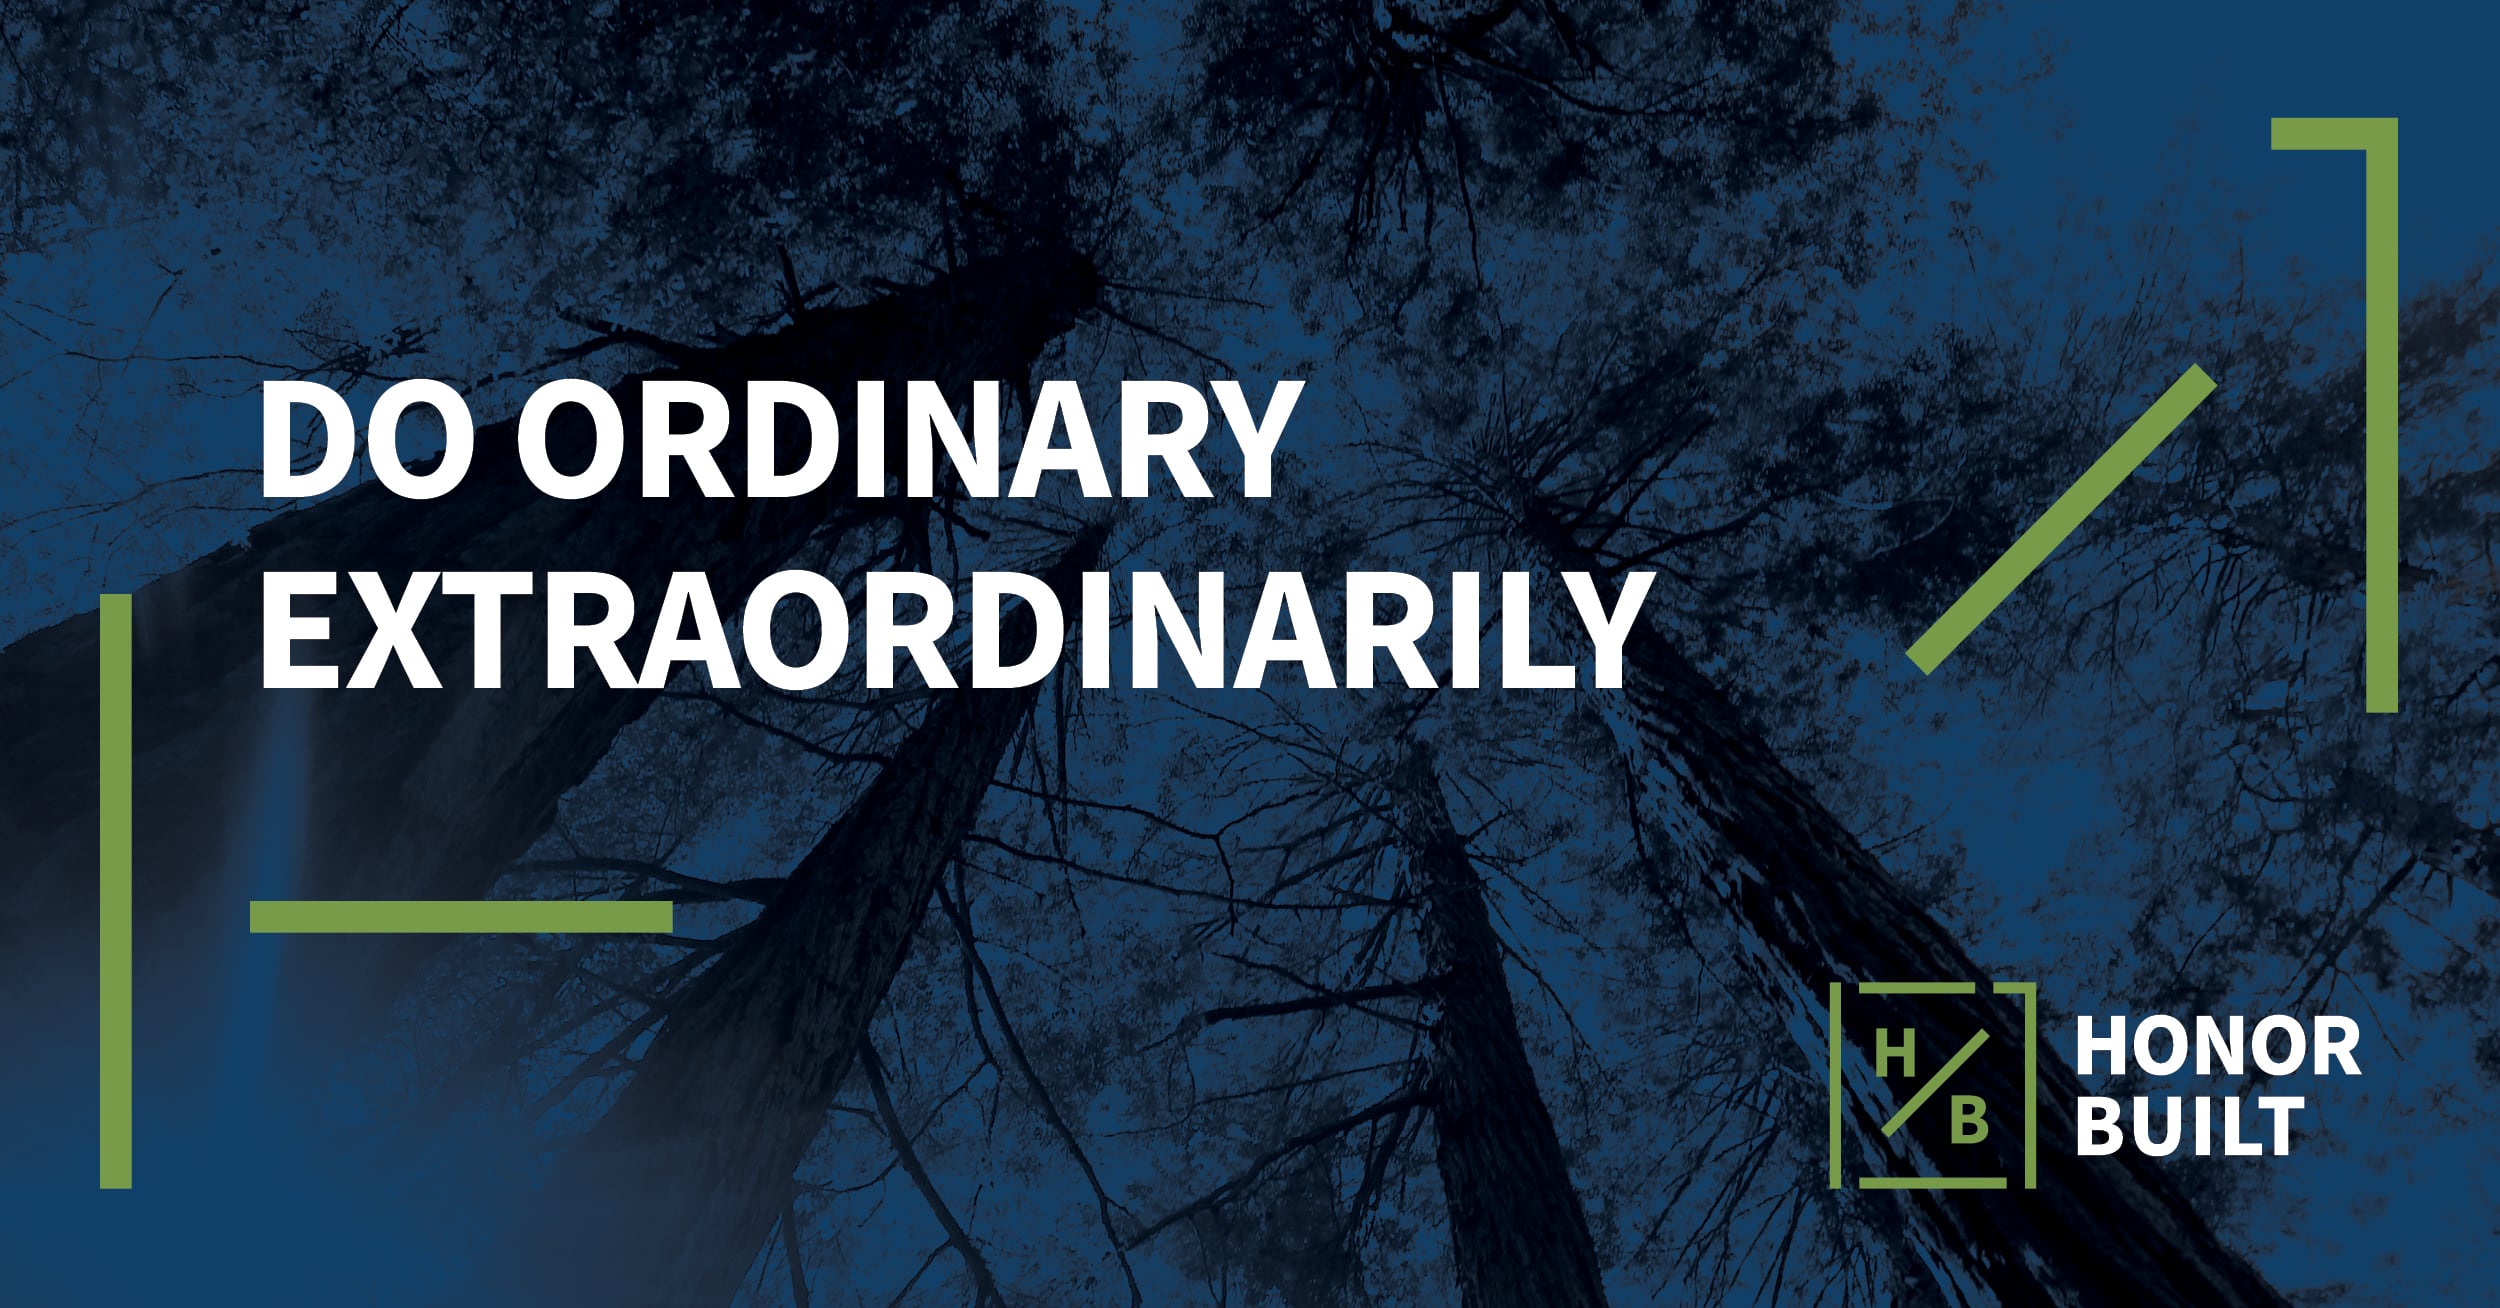 Honorism #24: Do ordinary extraordinarily